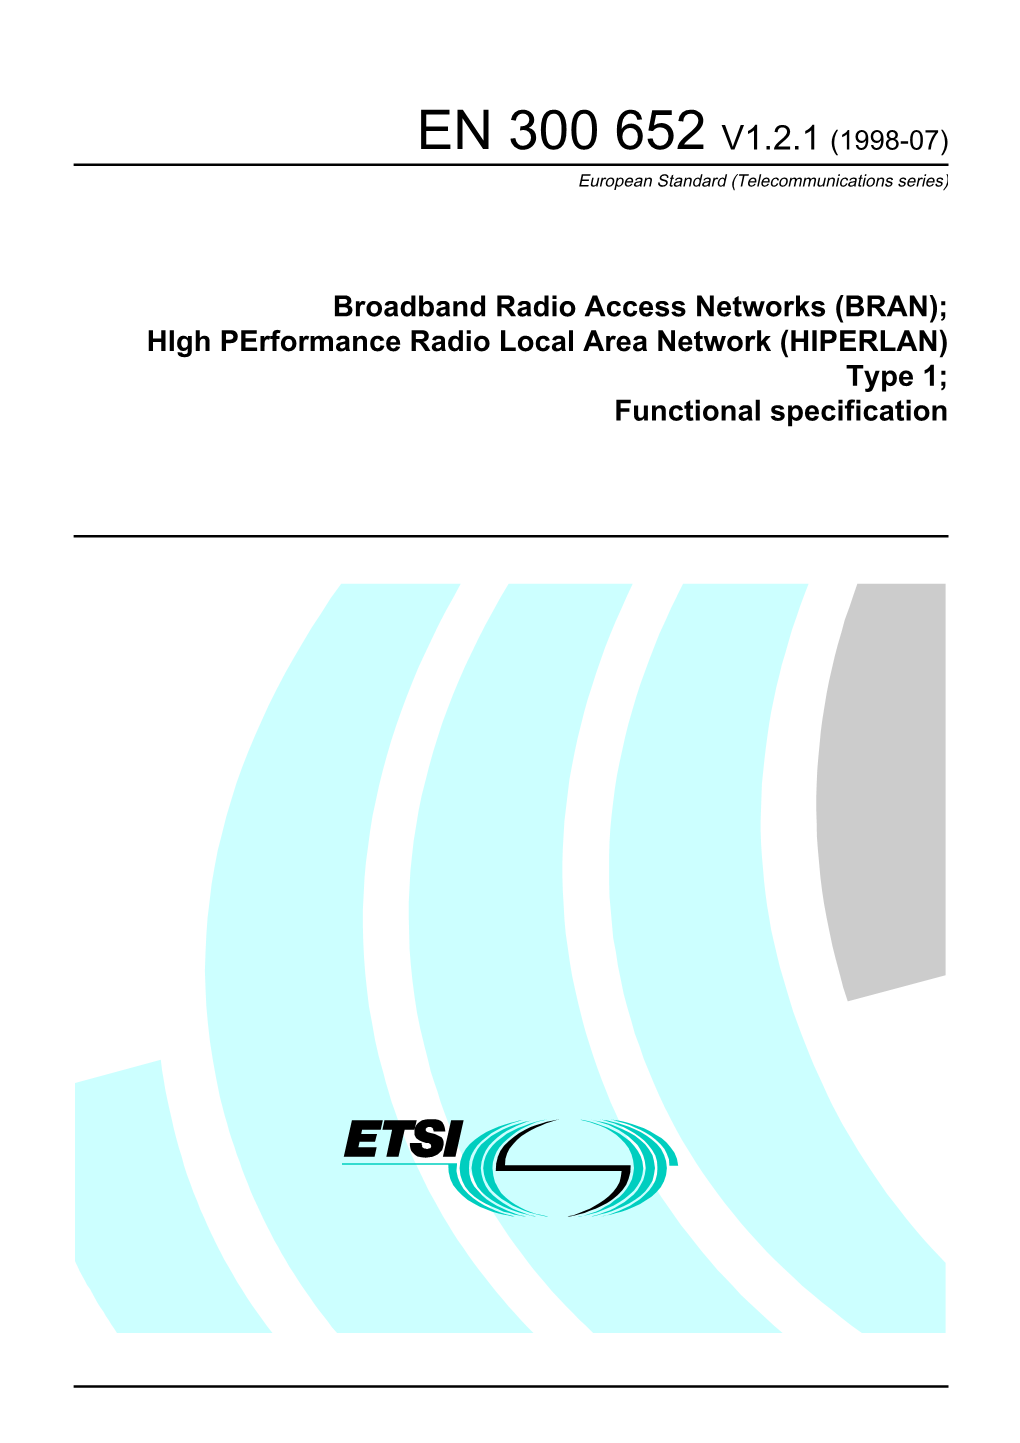 EN 300 652 V1.2.1 (1998-07) European Standard (Telecommunications Series)